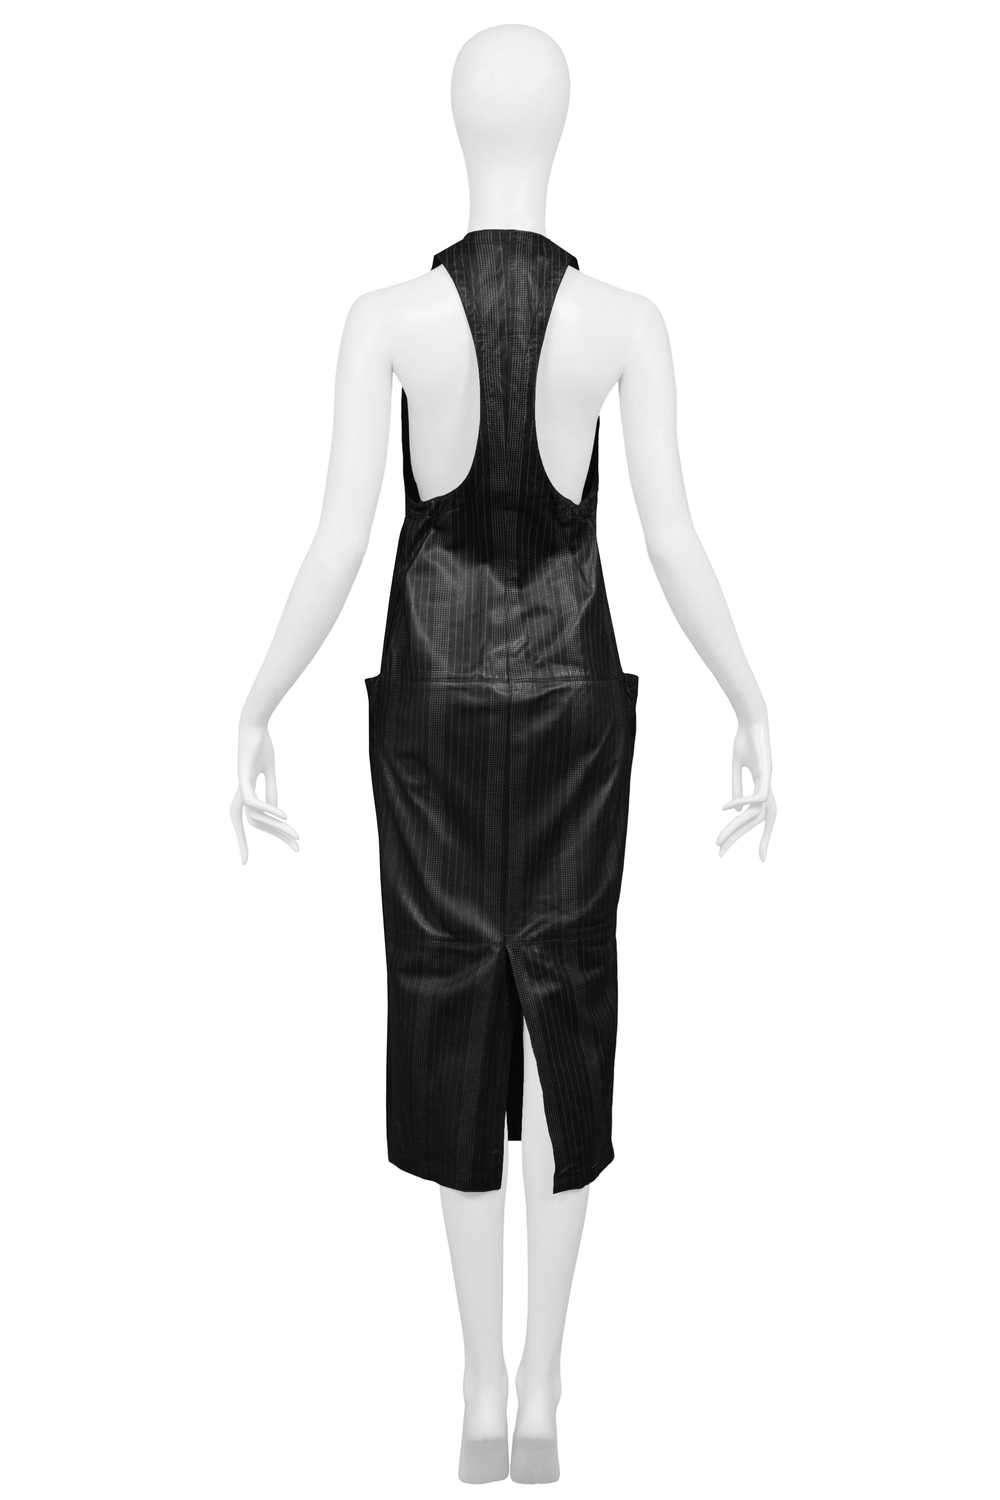 VERSACE BLACK LEATHER PINSTRIPE TANK DRESS 1990s - image 2